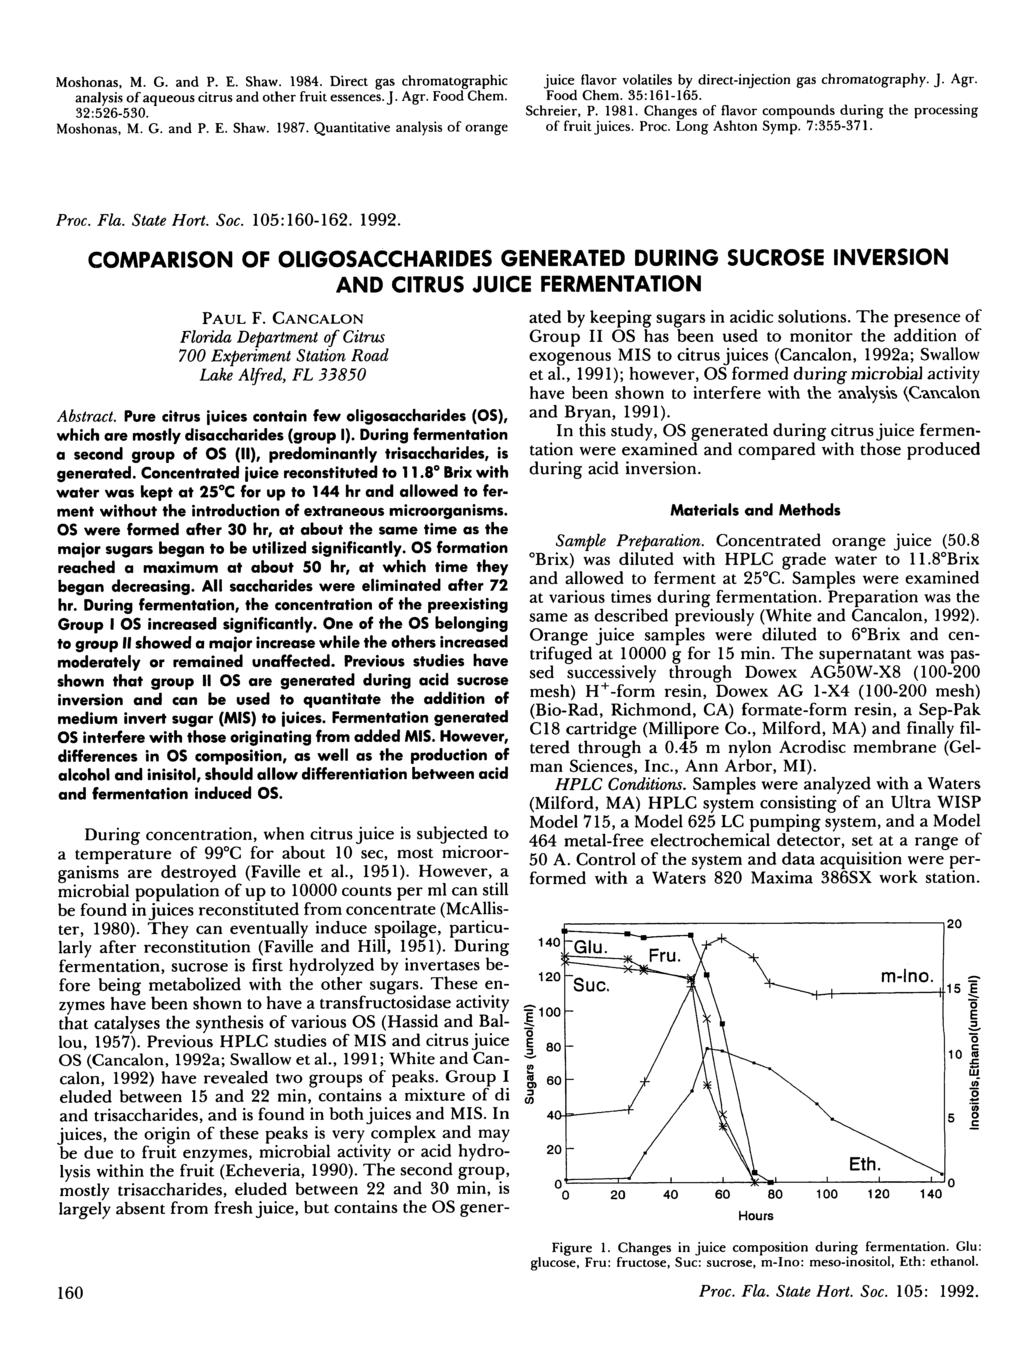 Moshonas, M. G. and P. E. Shaw. 1984. Direct gas chromatographic analysis of aqueous citrus and other fruit essences. J. Agr. Food Chem. 32:526-530. Moshonas, M. G. and P. E. Shaw. 1987.